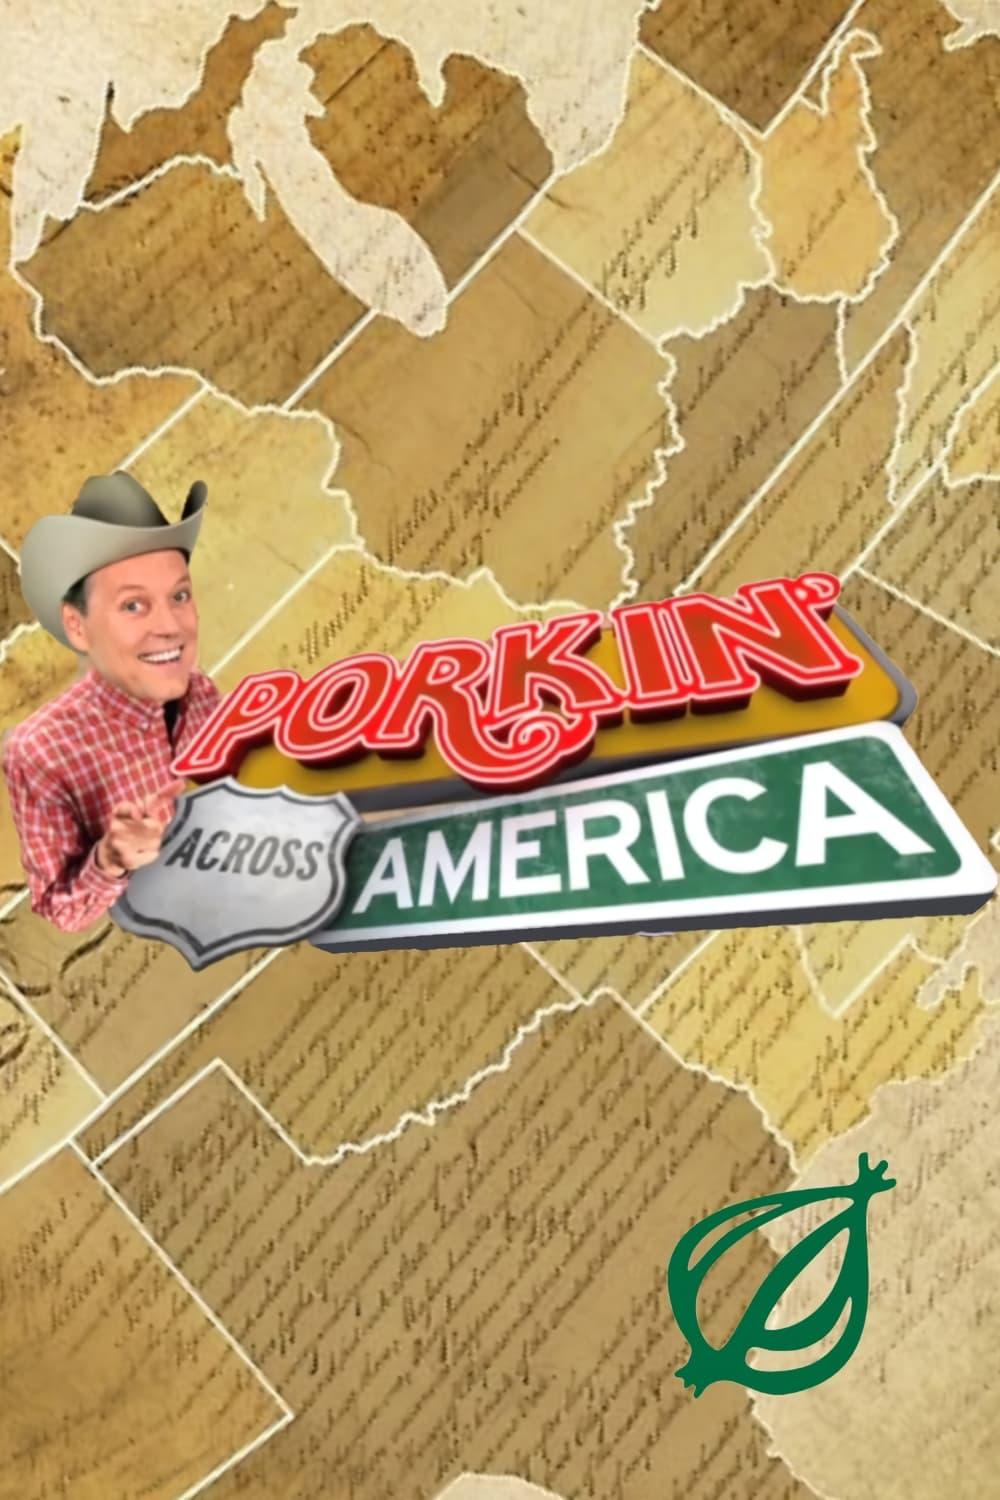 Porkin' Across America poster